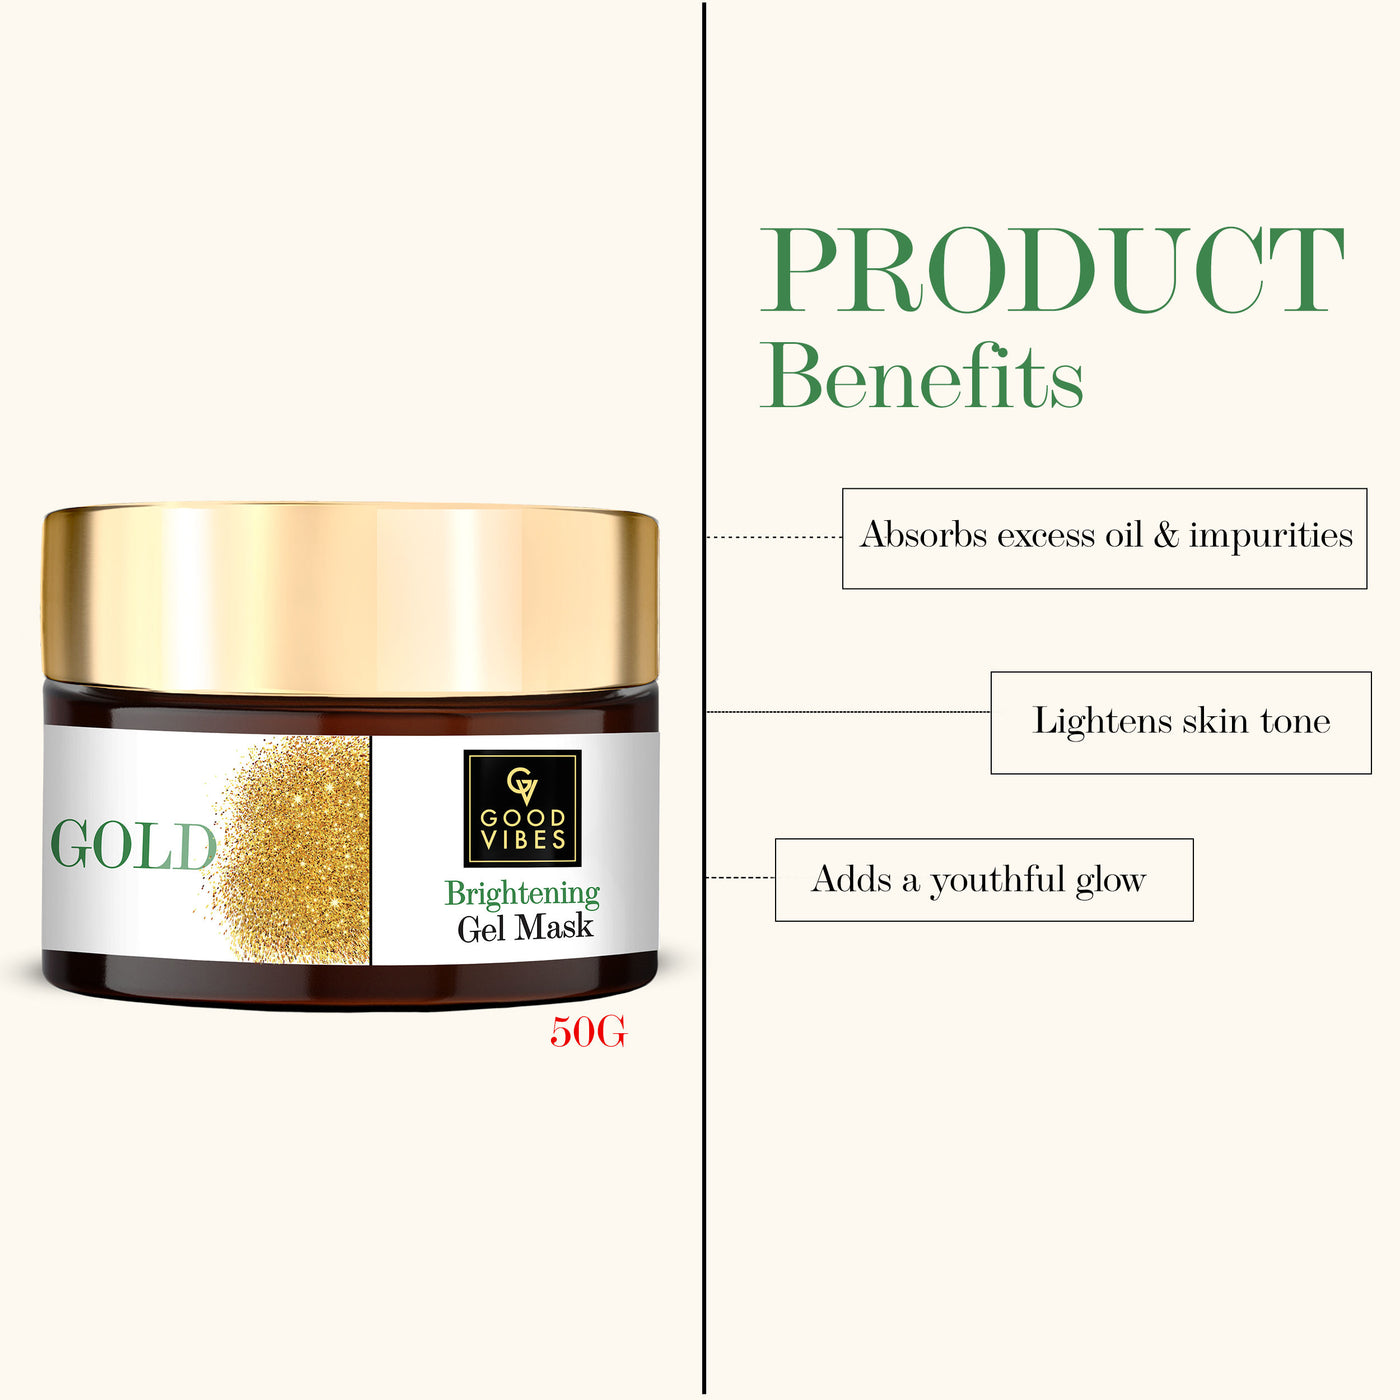 good-vibe-gold-brightening-gel-mask-50g-1-5